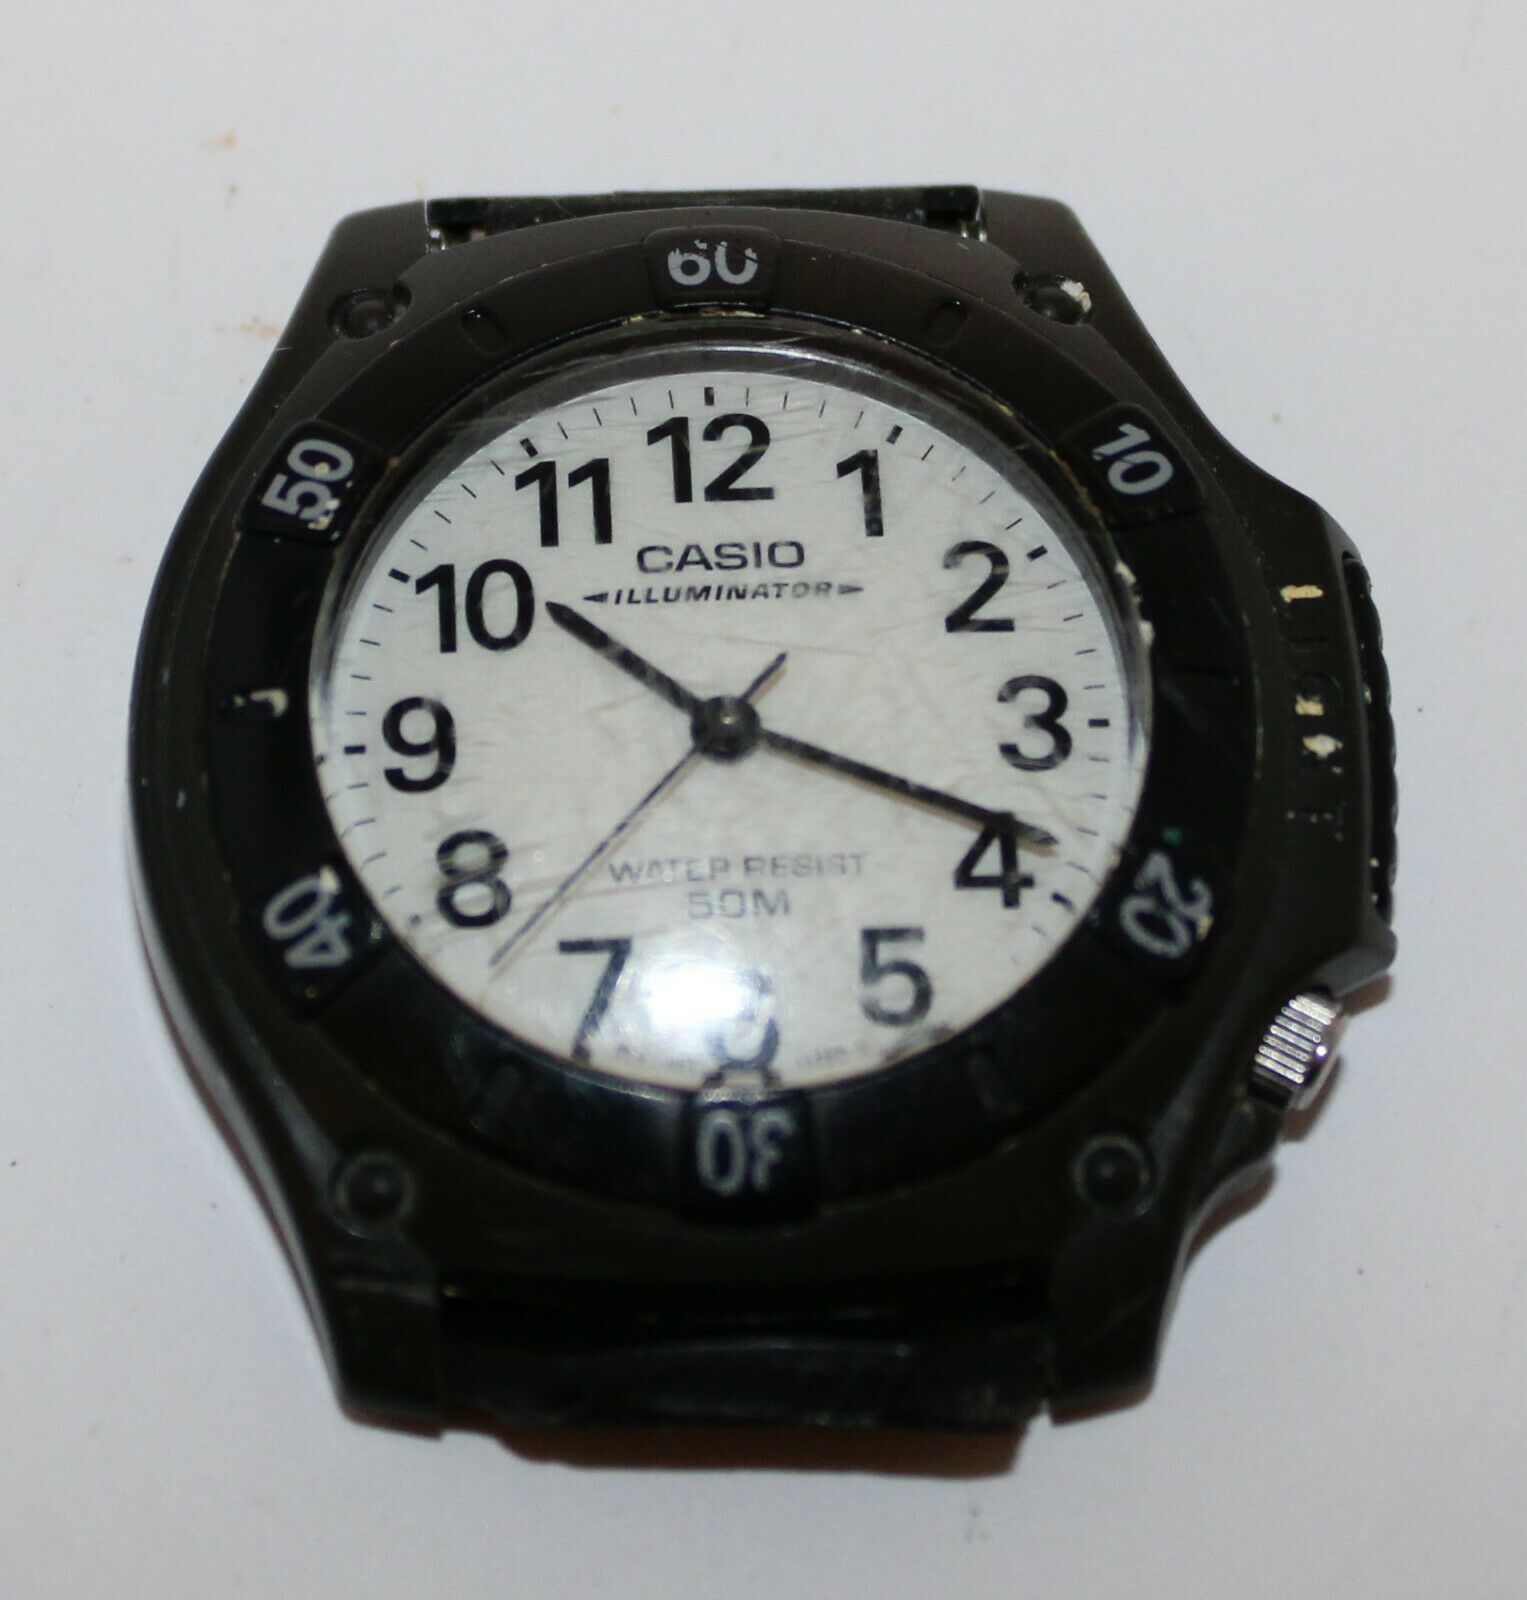 Casio Illuminator wrist watch head 1319 MW-58 Used working